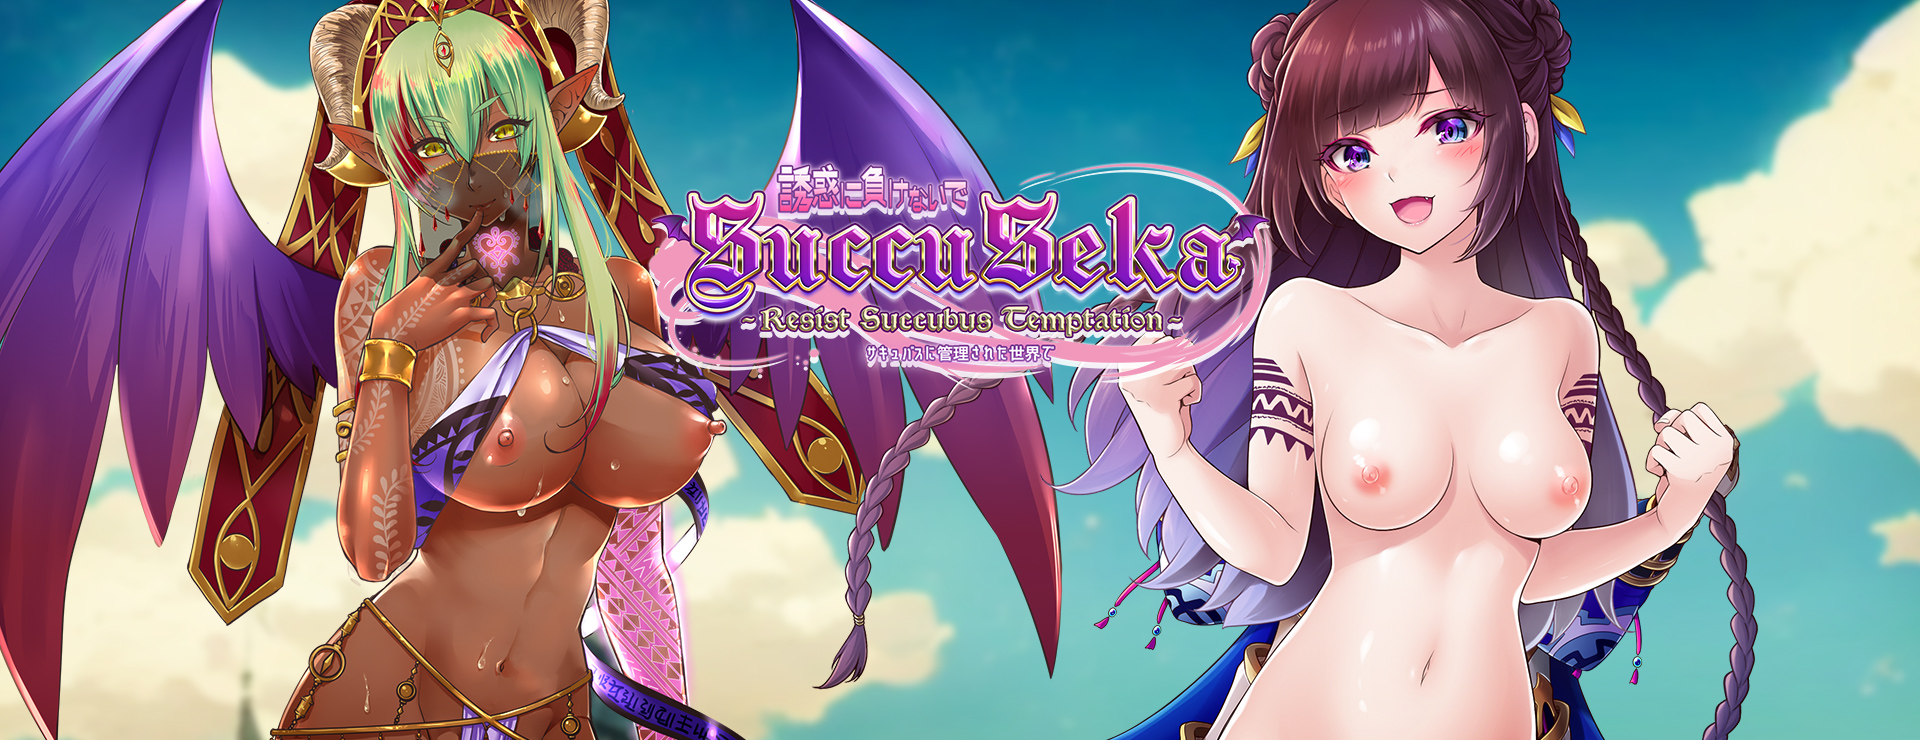 SuccuSeka: Resist Succubus Temptation Global Version - Japanisches Adventure Spiel